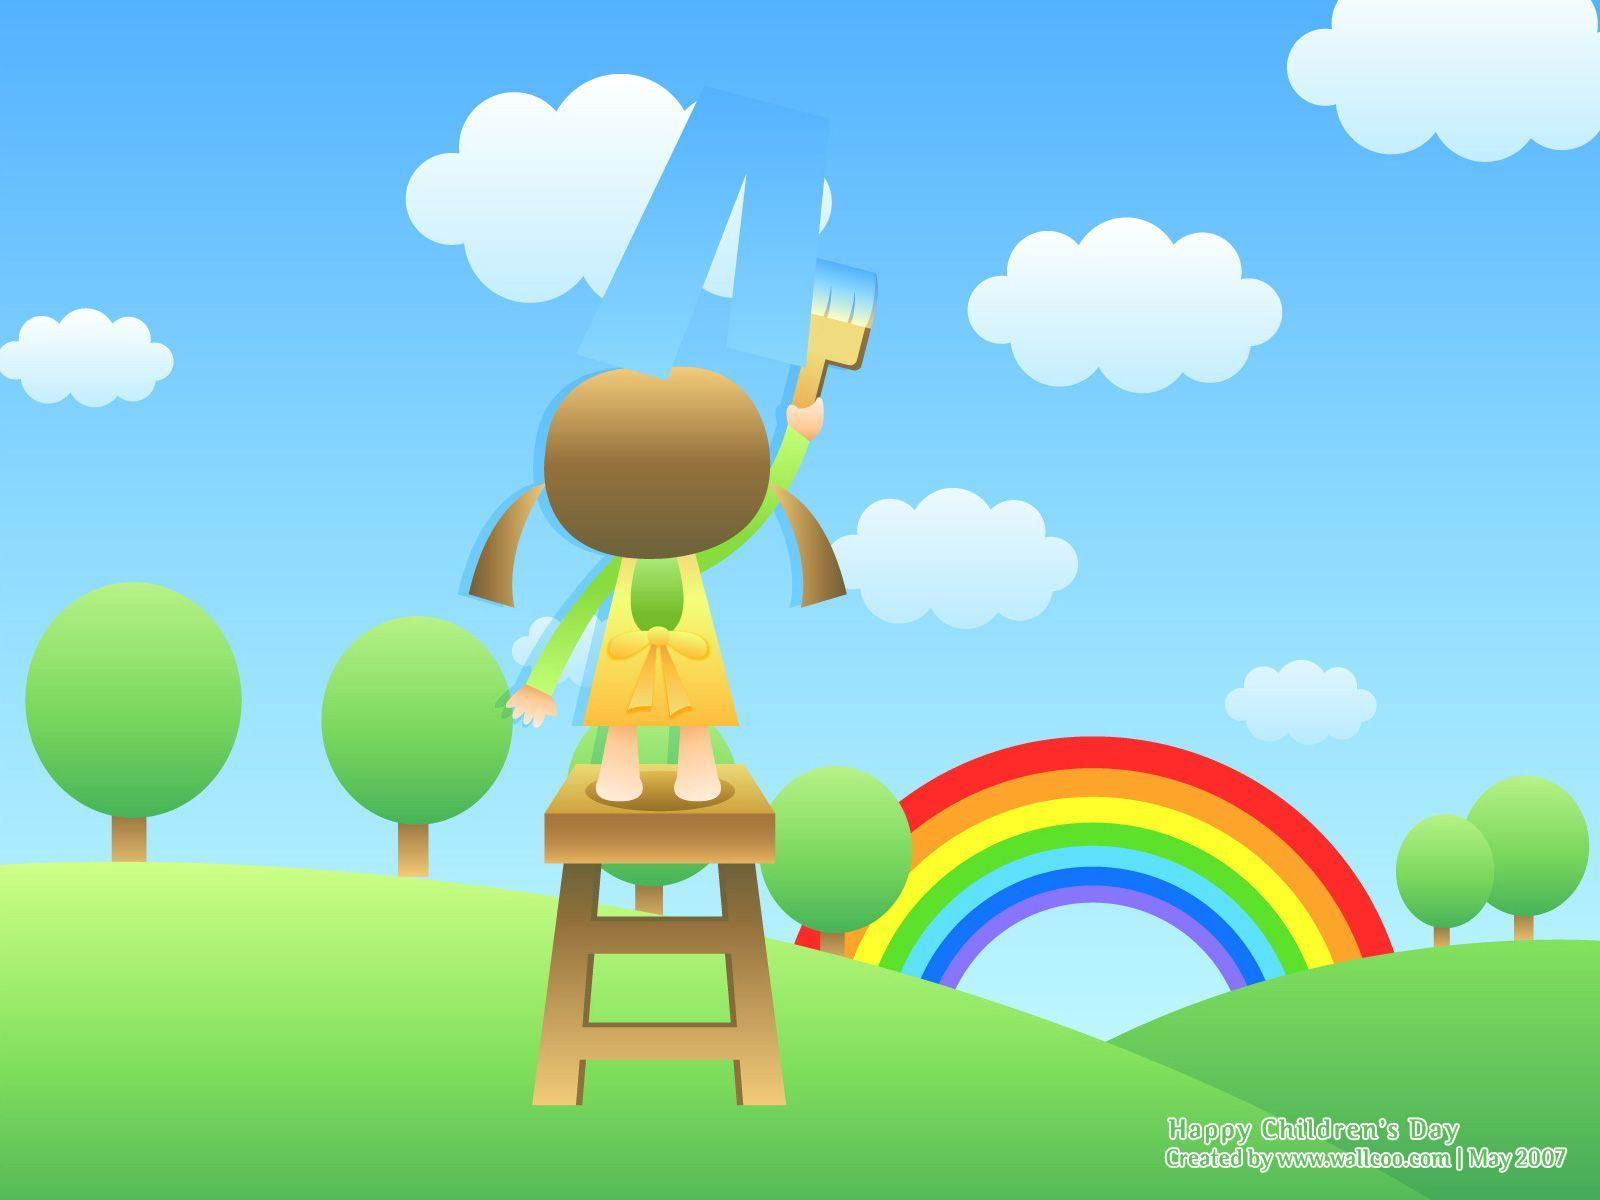 Children Wallpaper, Children Android Compatible Photo, Fungyung